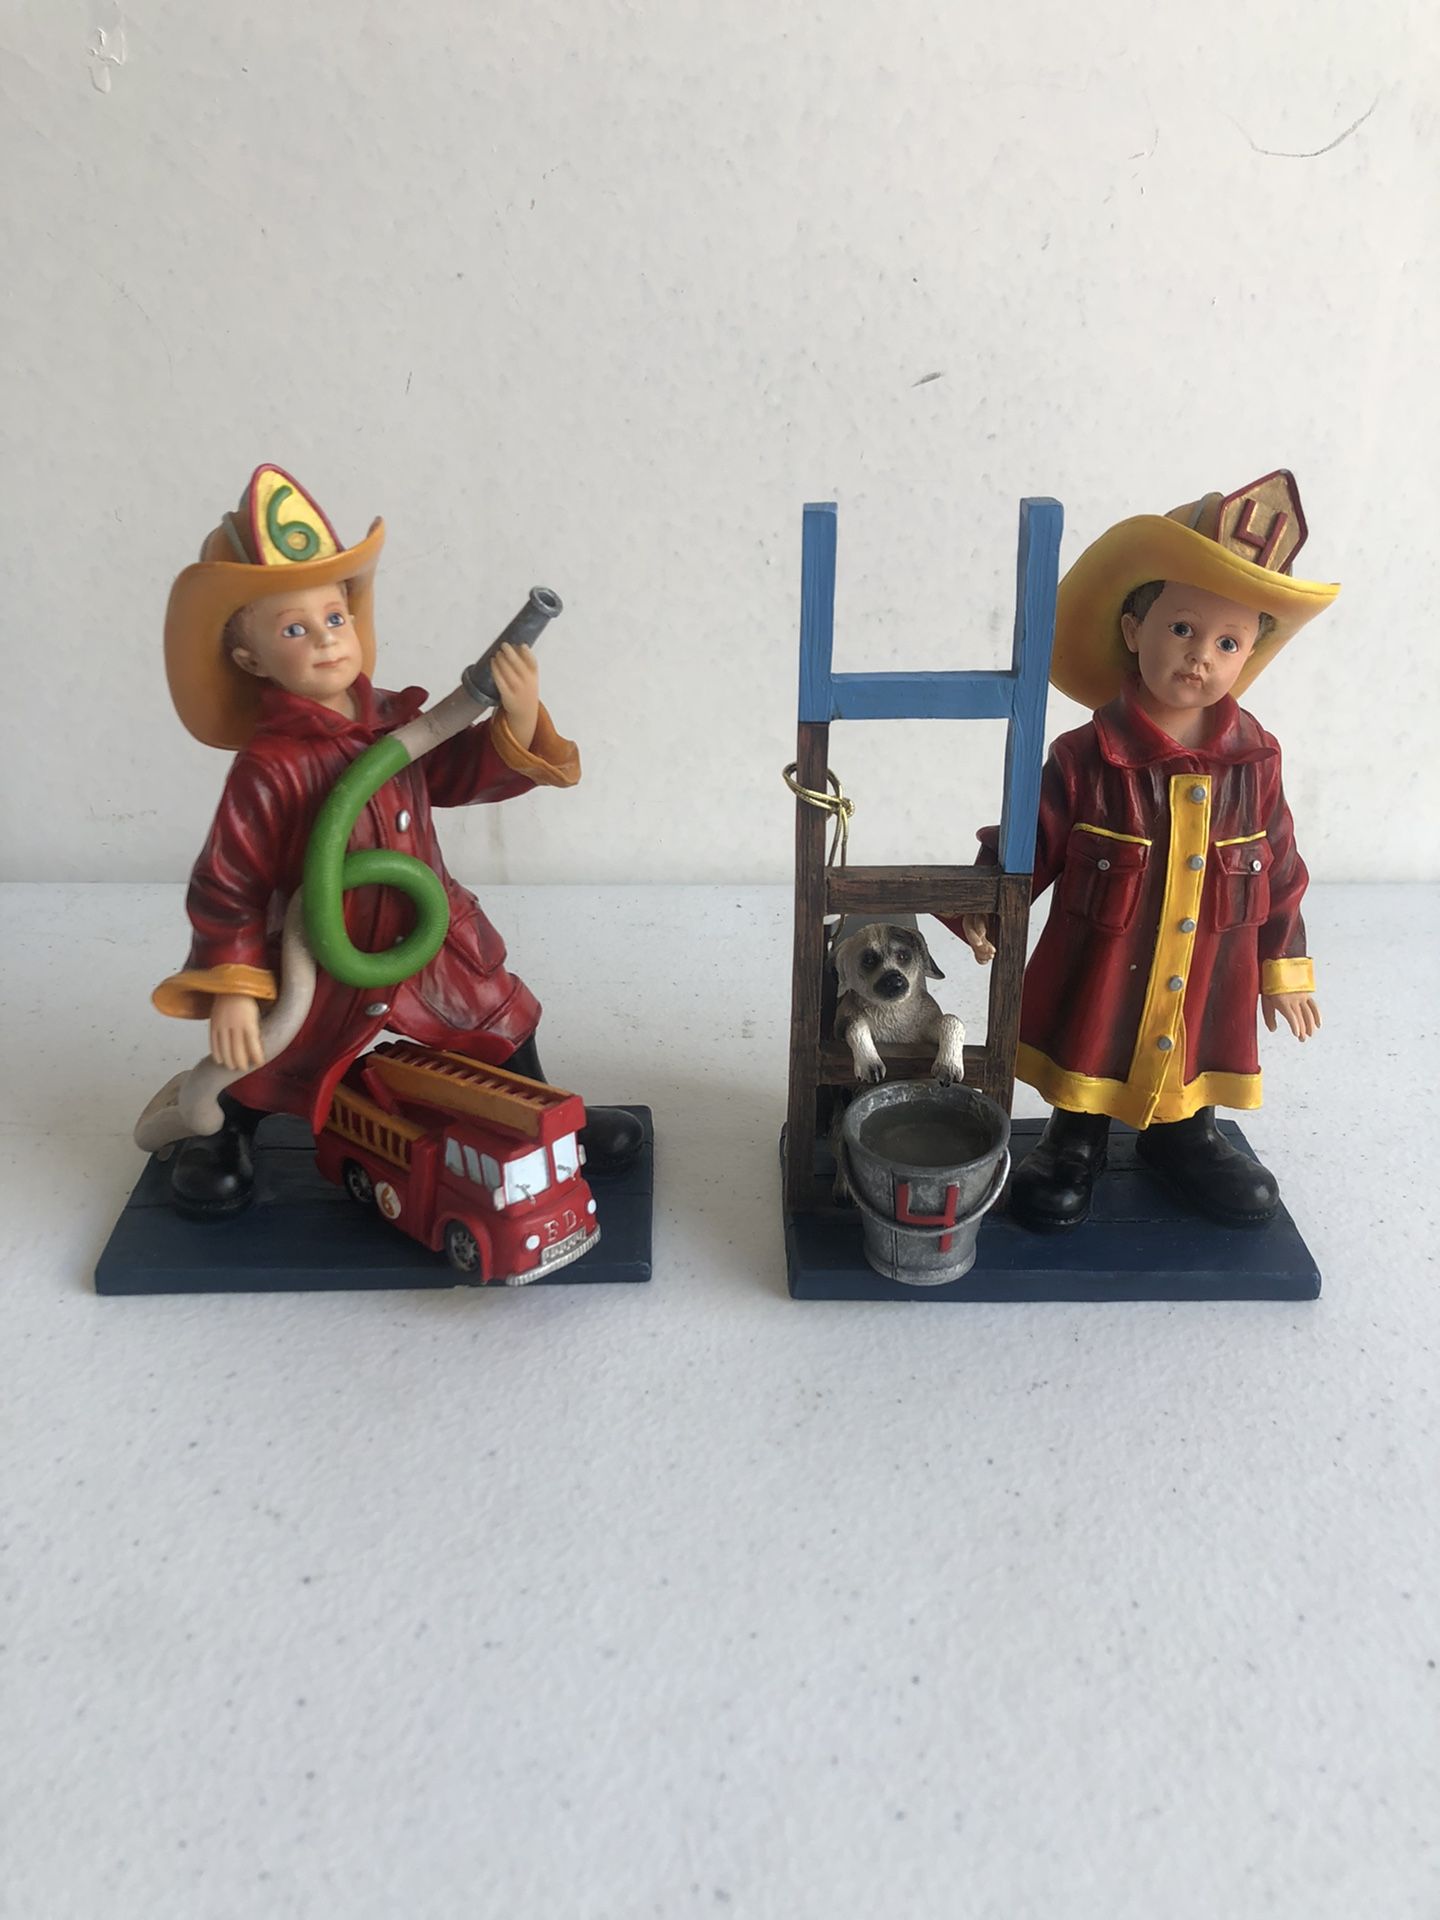 Vanmark Red Hats of Courage Year 4 Birthday Firefighter Boy Figurine with Ladder